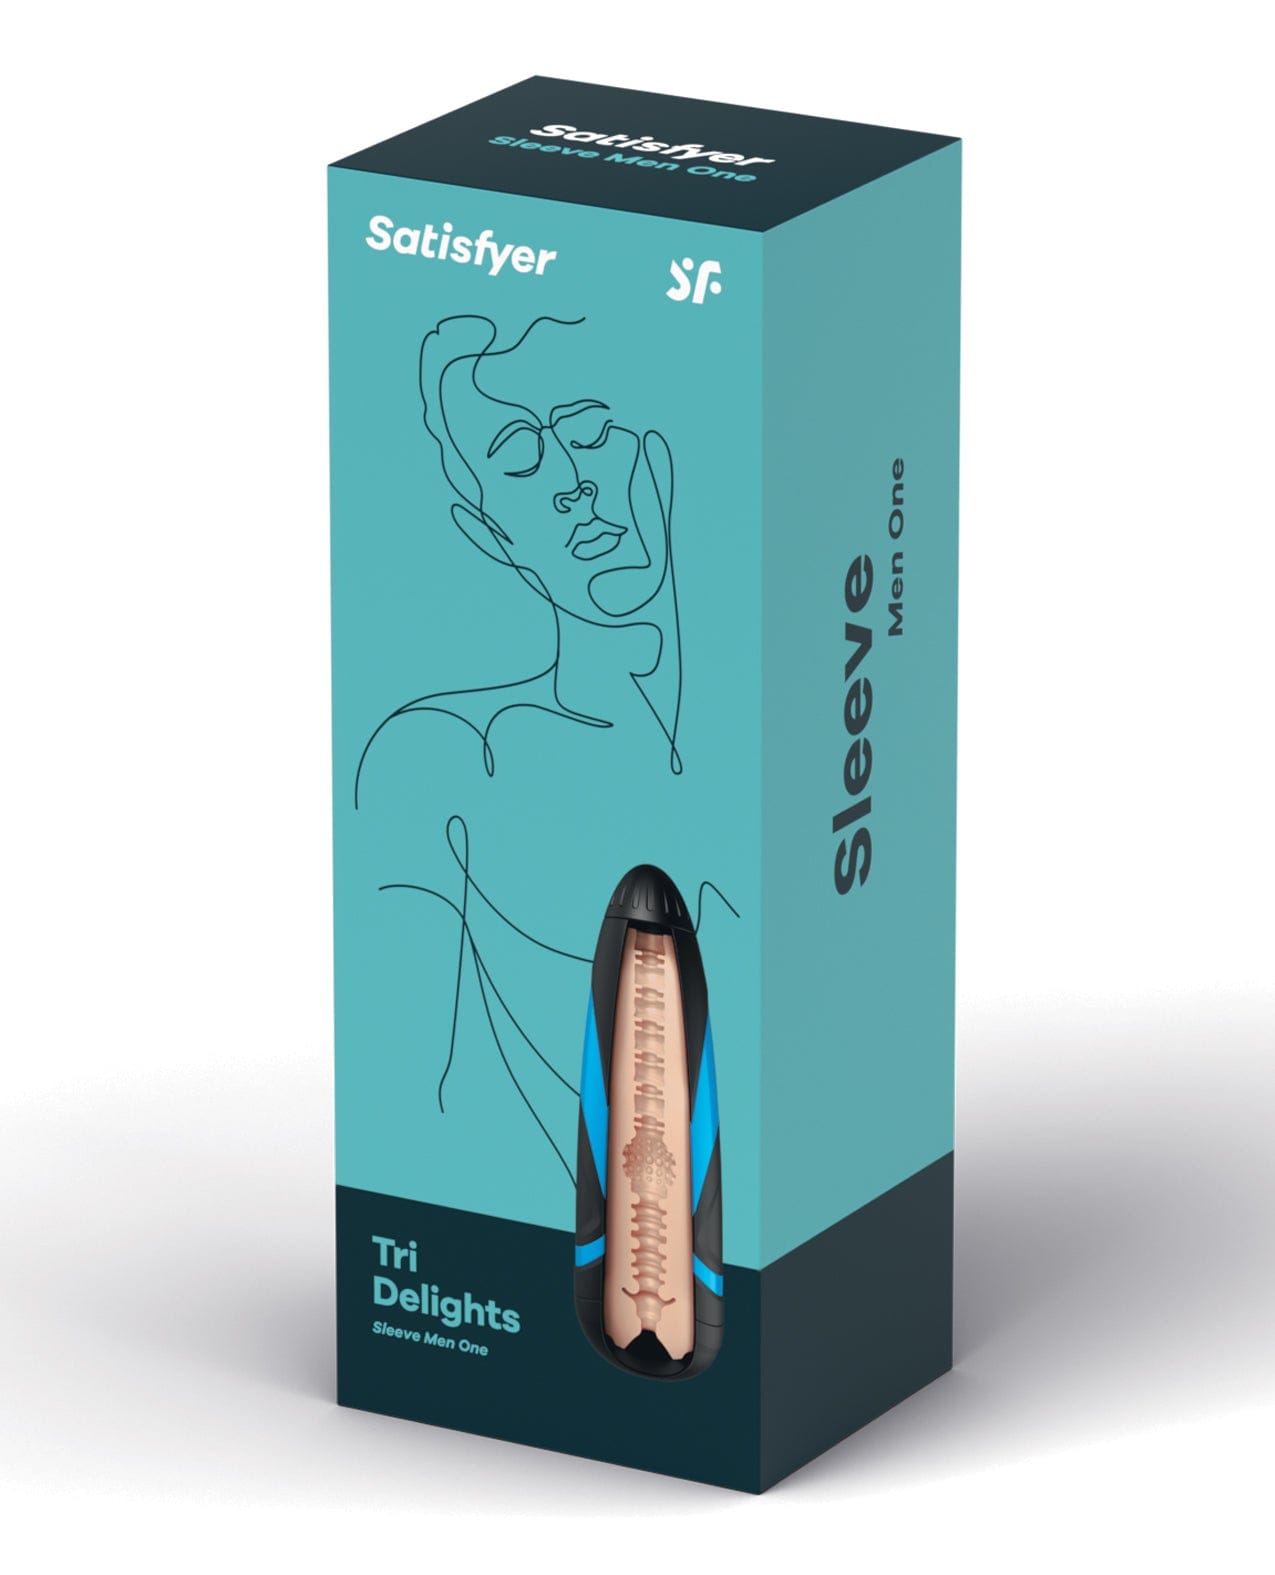 Satisfyer Men Masturbator Sleeve Tri Delights - Rolik®